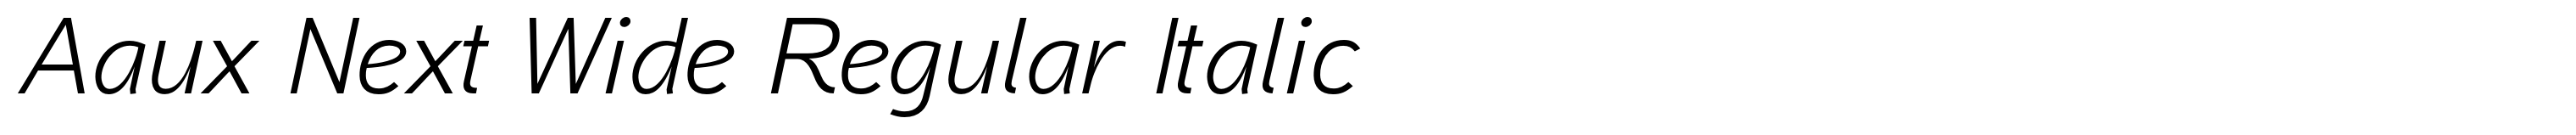 Aaux Next Wide Regular Italic